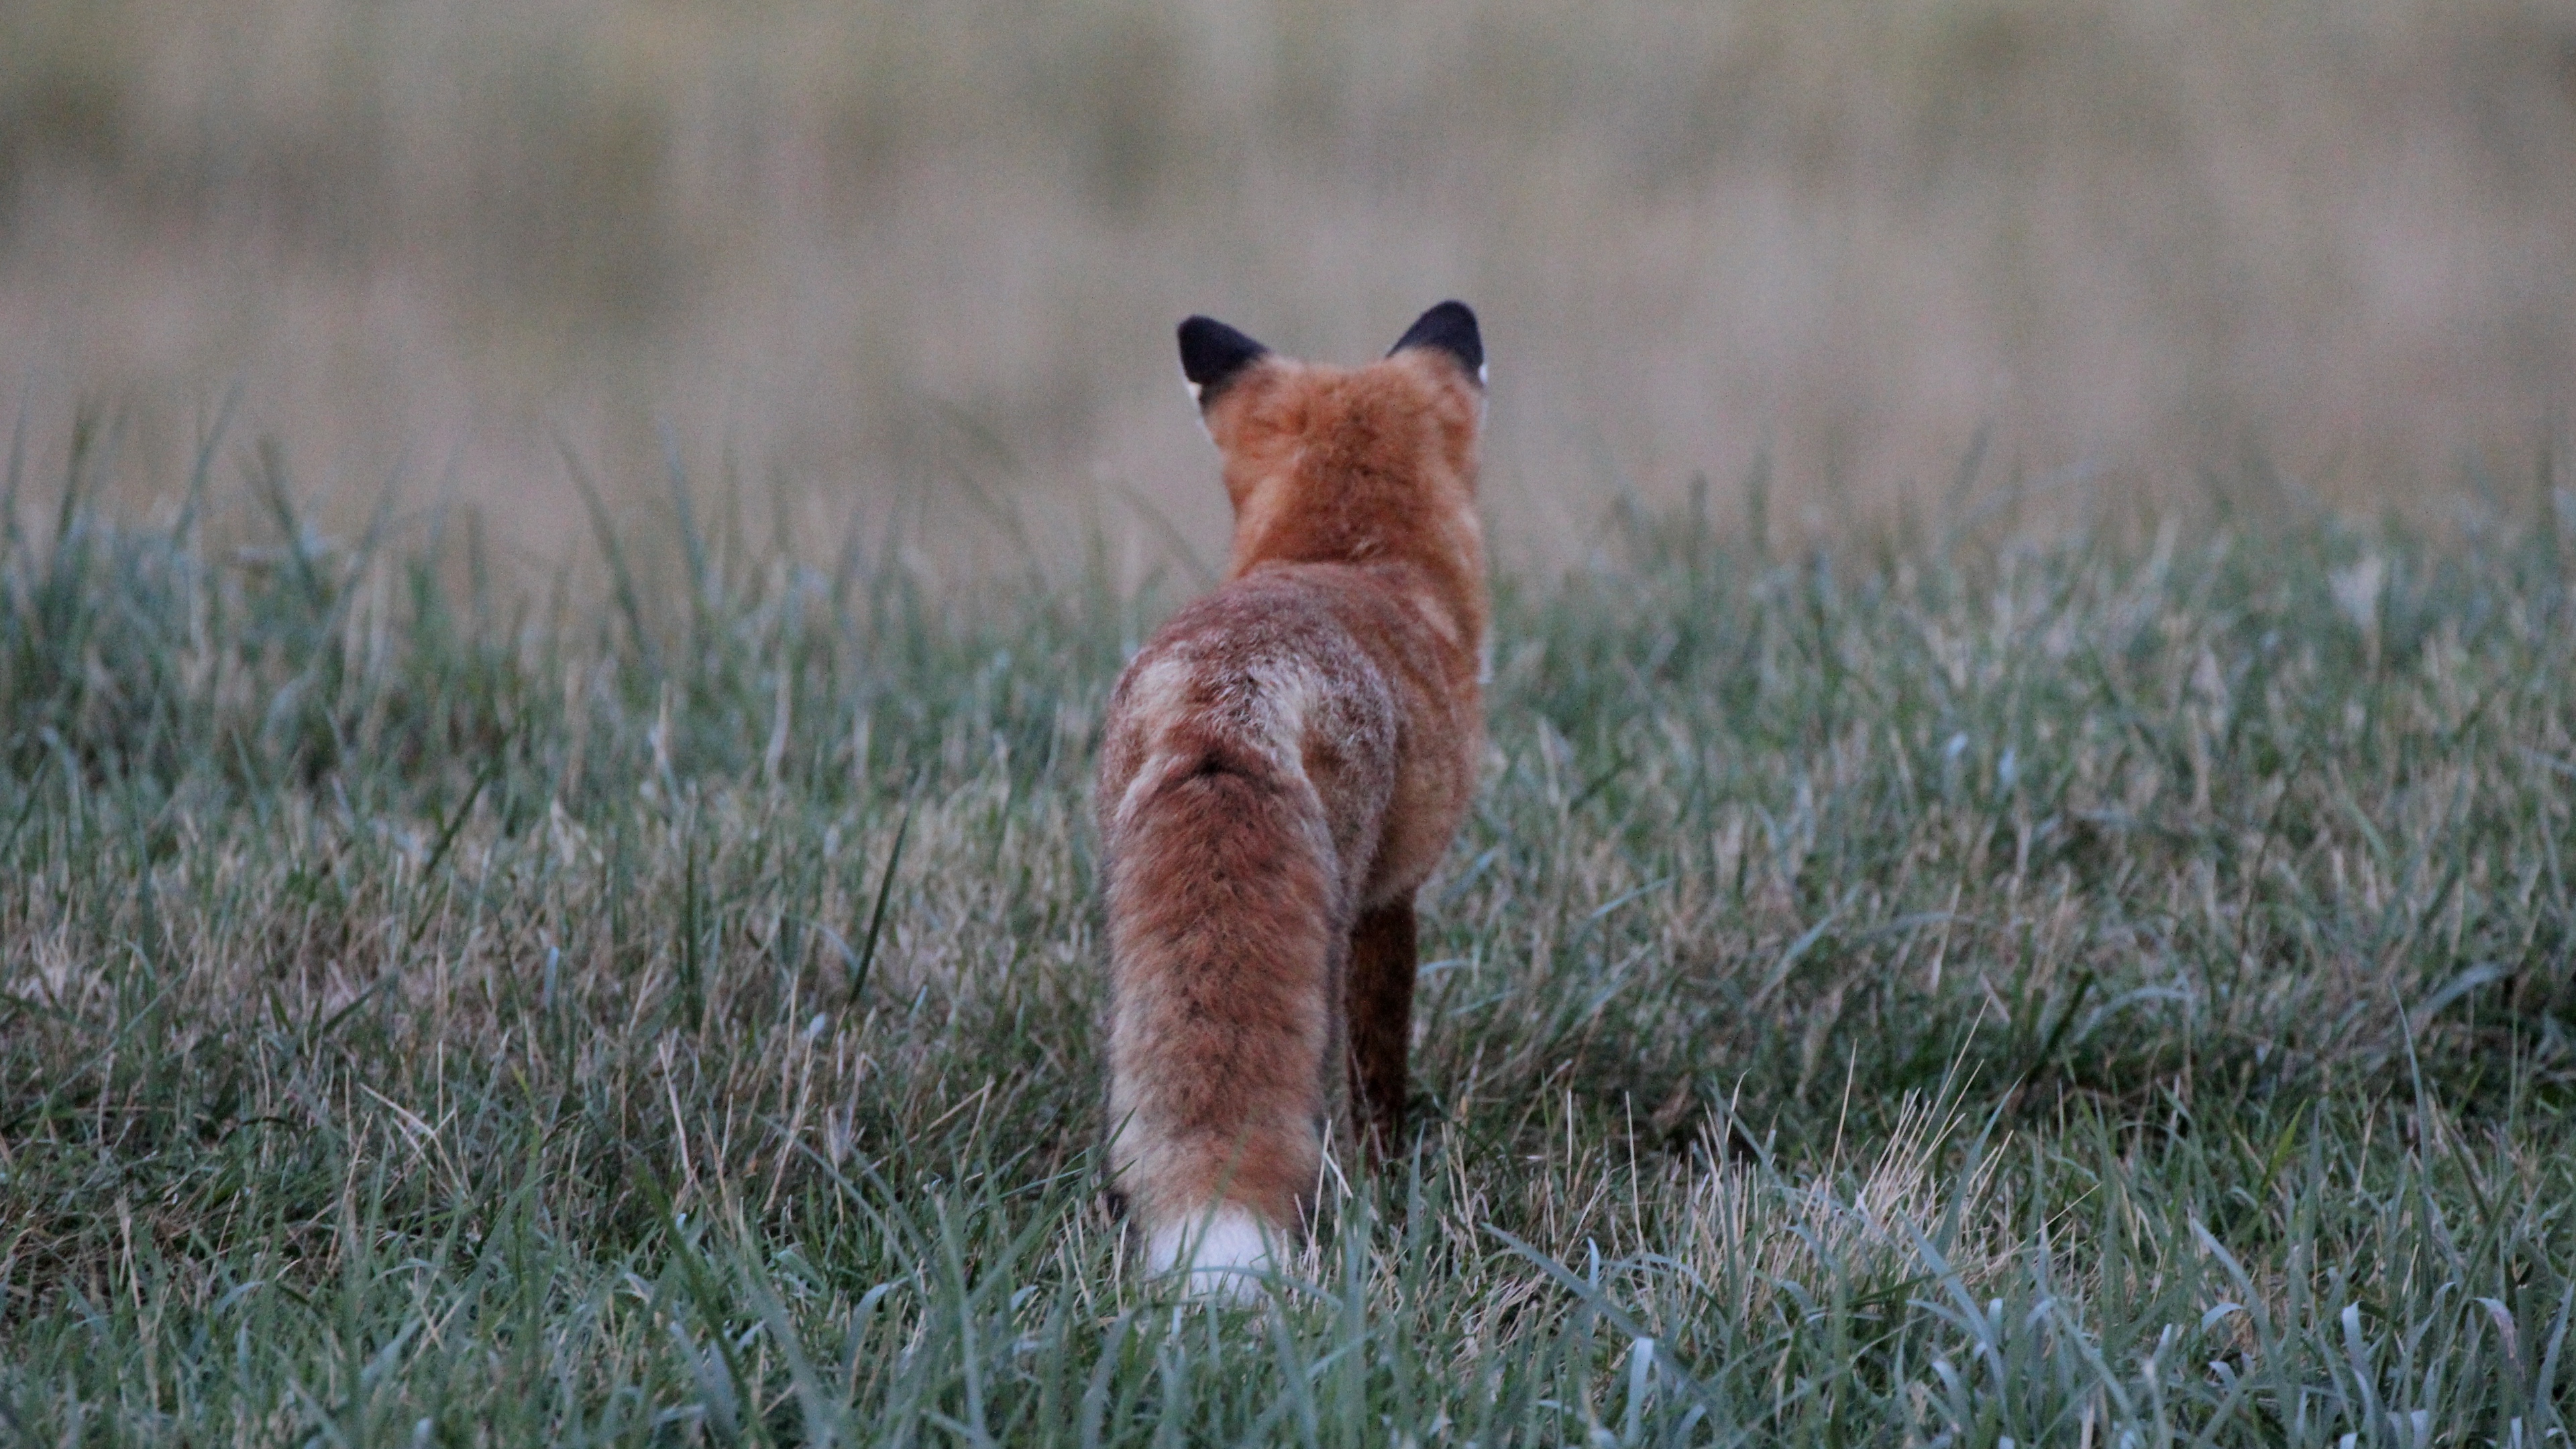 fox grass furry 4k 1542242493 - fox, grass, furry 4k - Grass, furry, fox